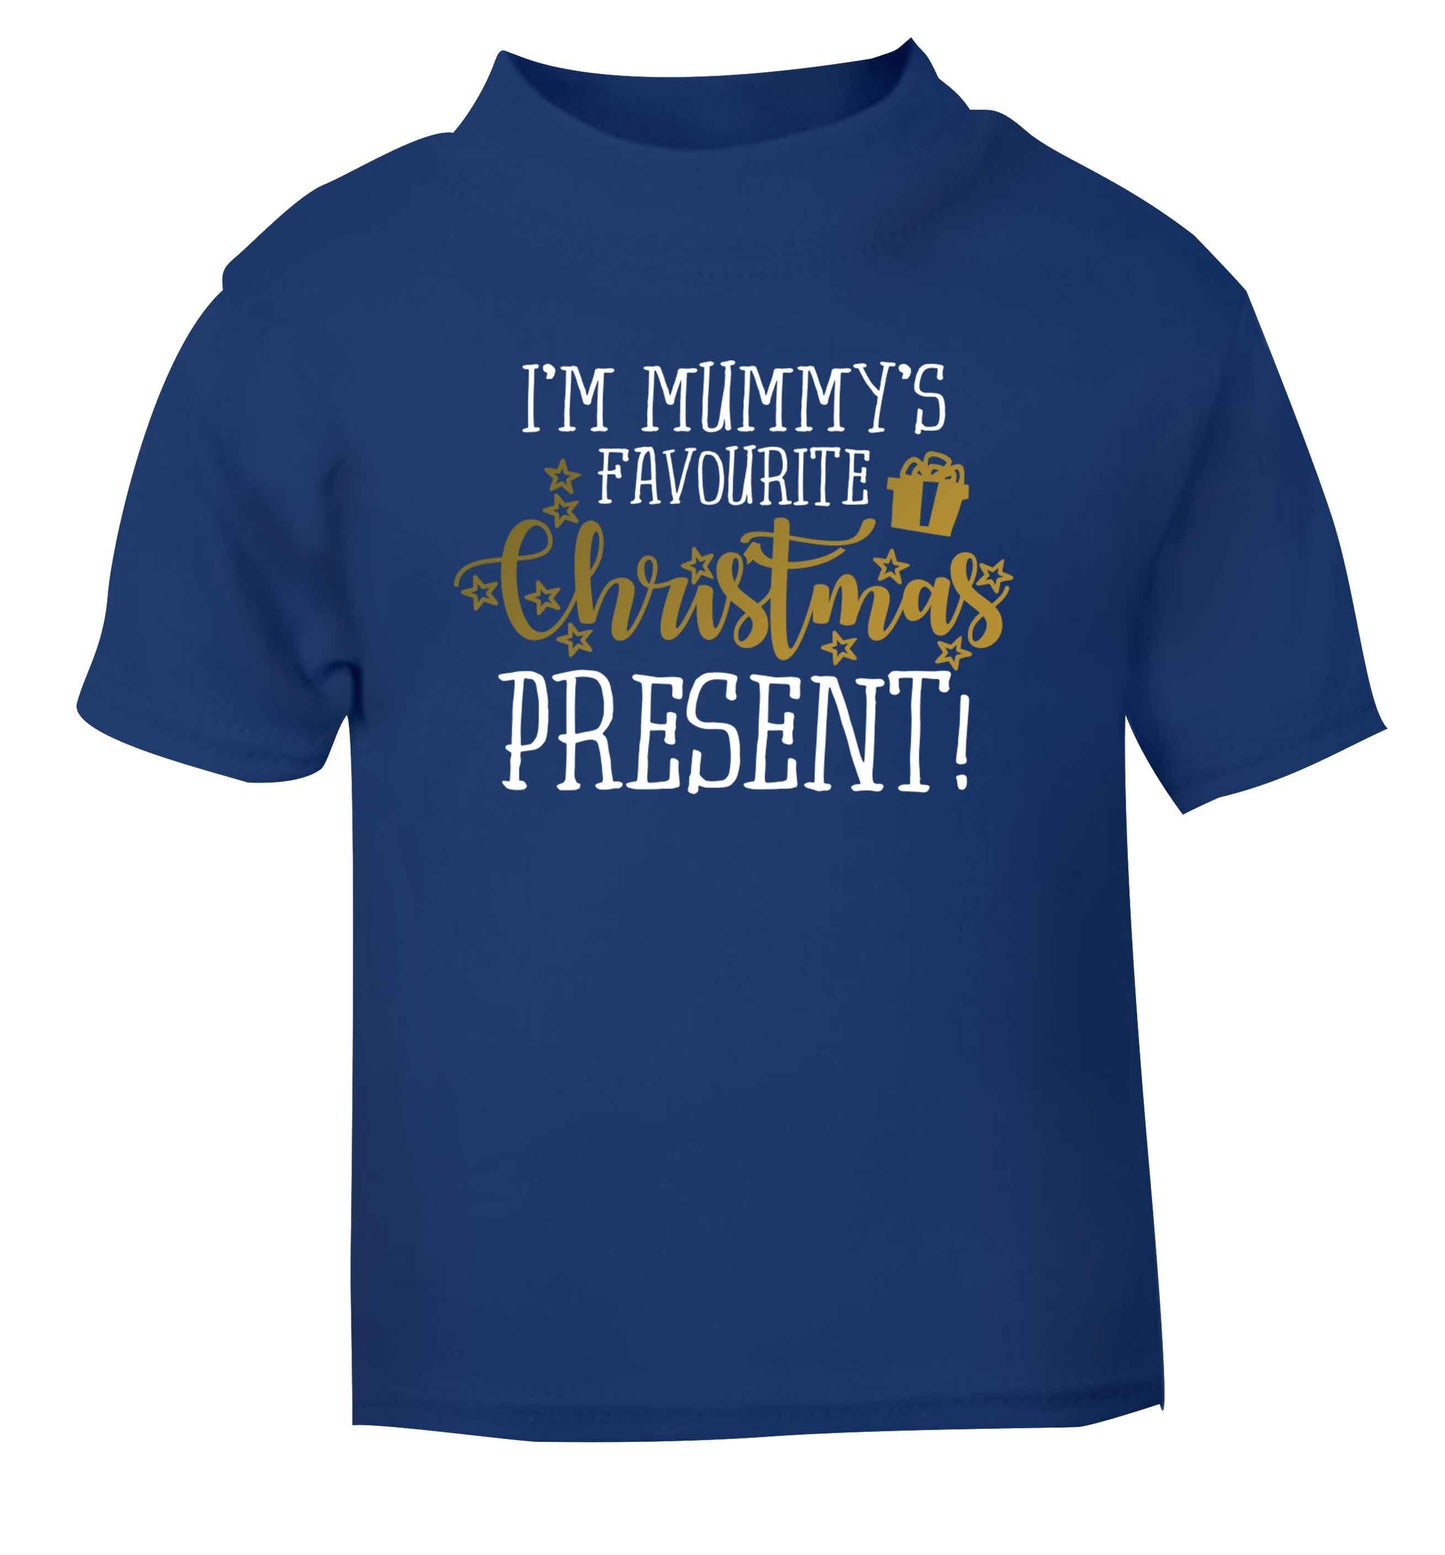 I'm Mummy's favourite Christmas present blue Baby Toddler Tshirt 2 Years